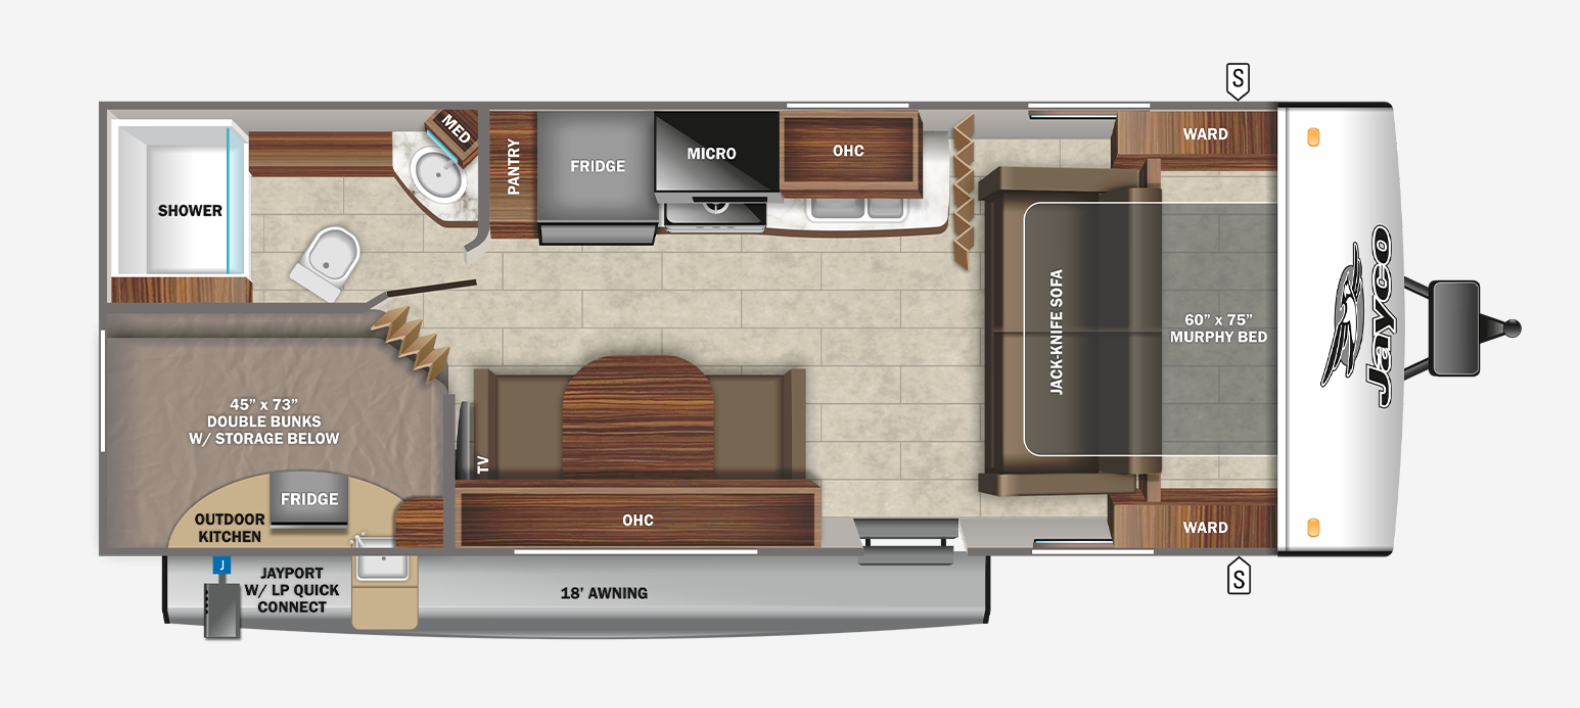 jayco travel trailer floorplan with murphy bed